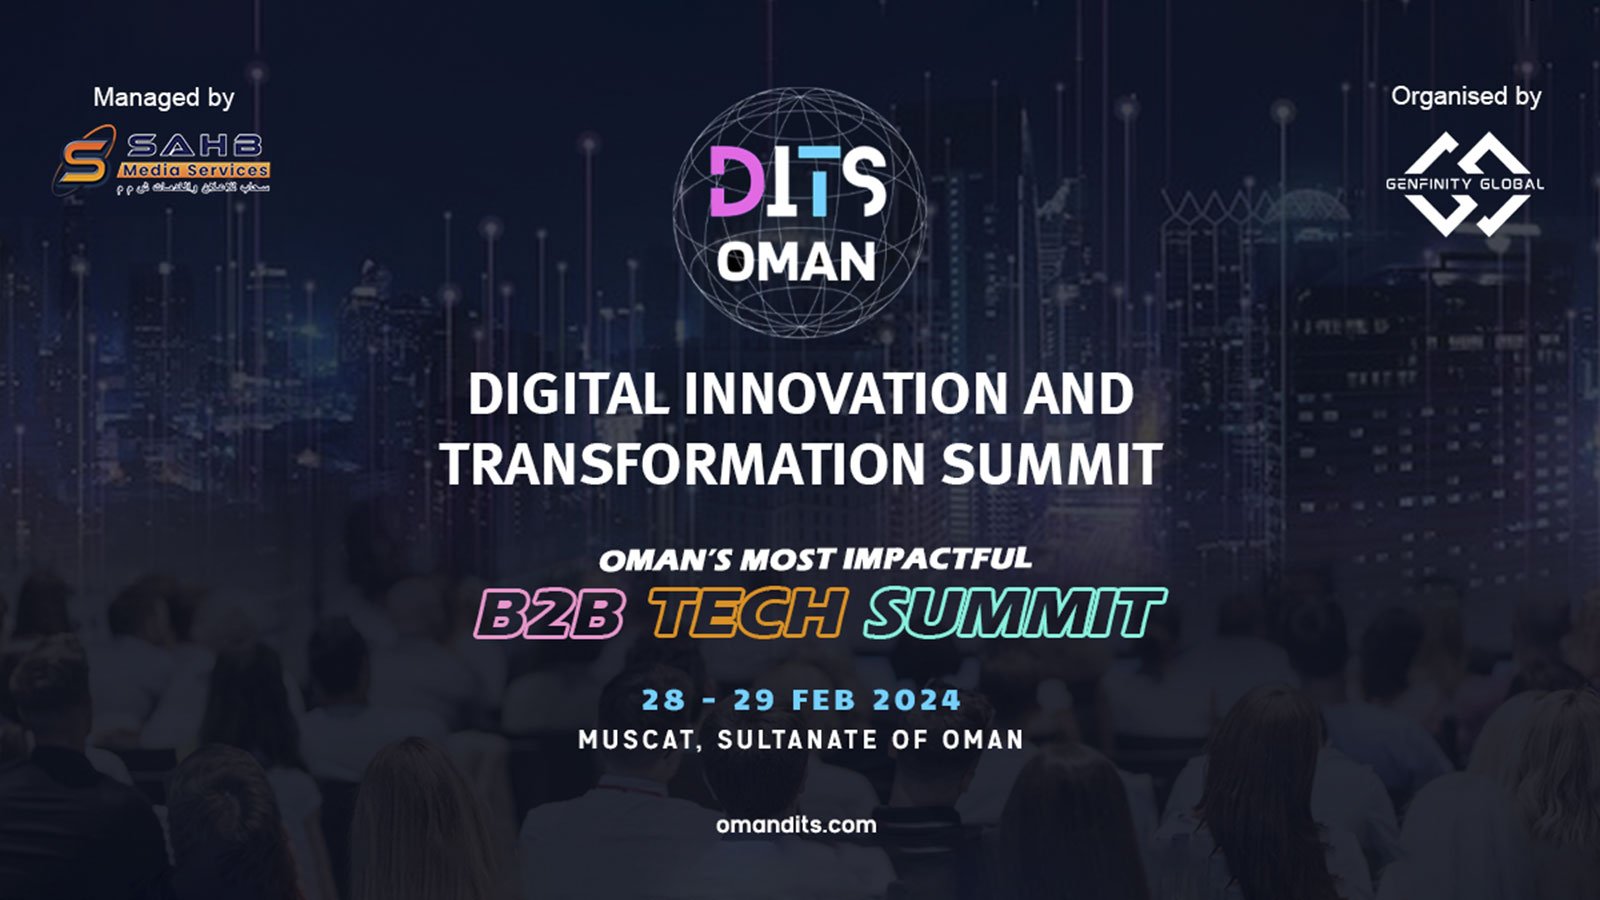 Genfinity Global Is Hosting the Digital Innovation & Transformation Summit in Feb 2024